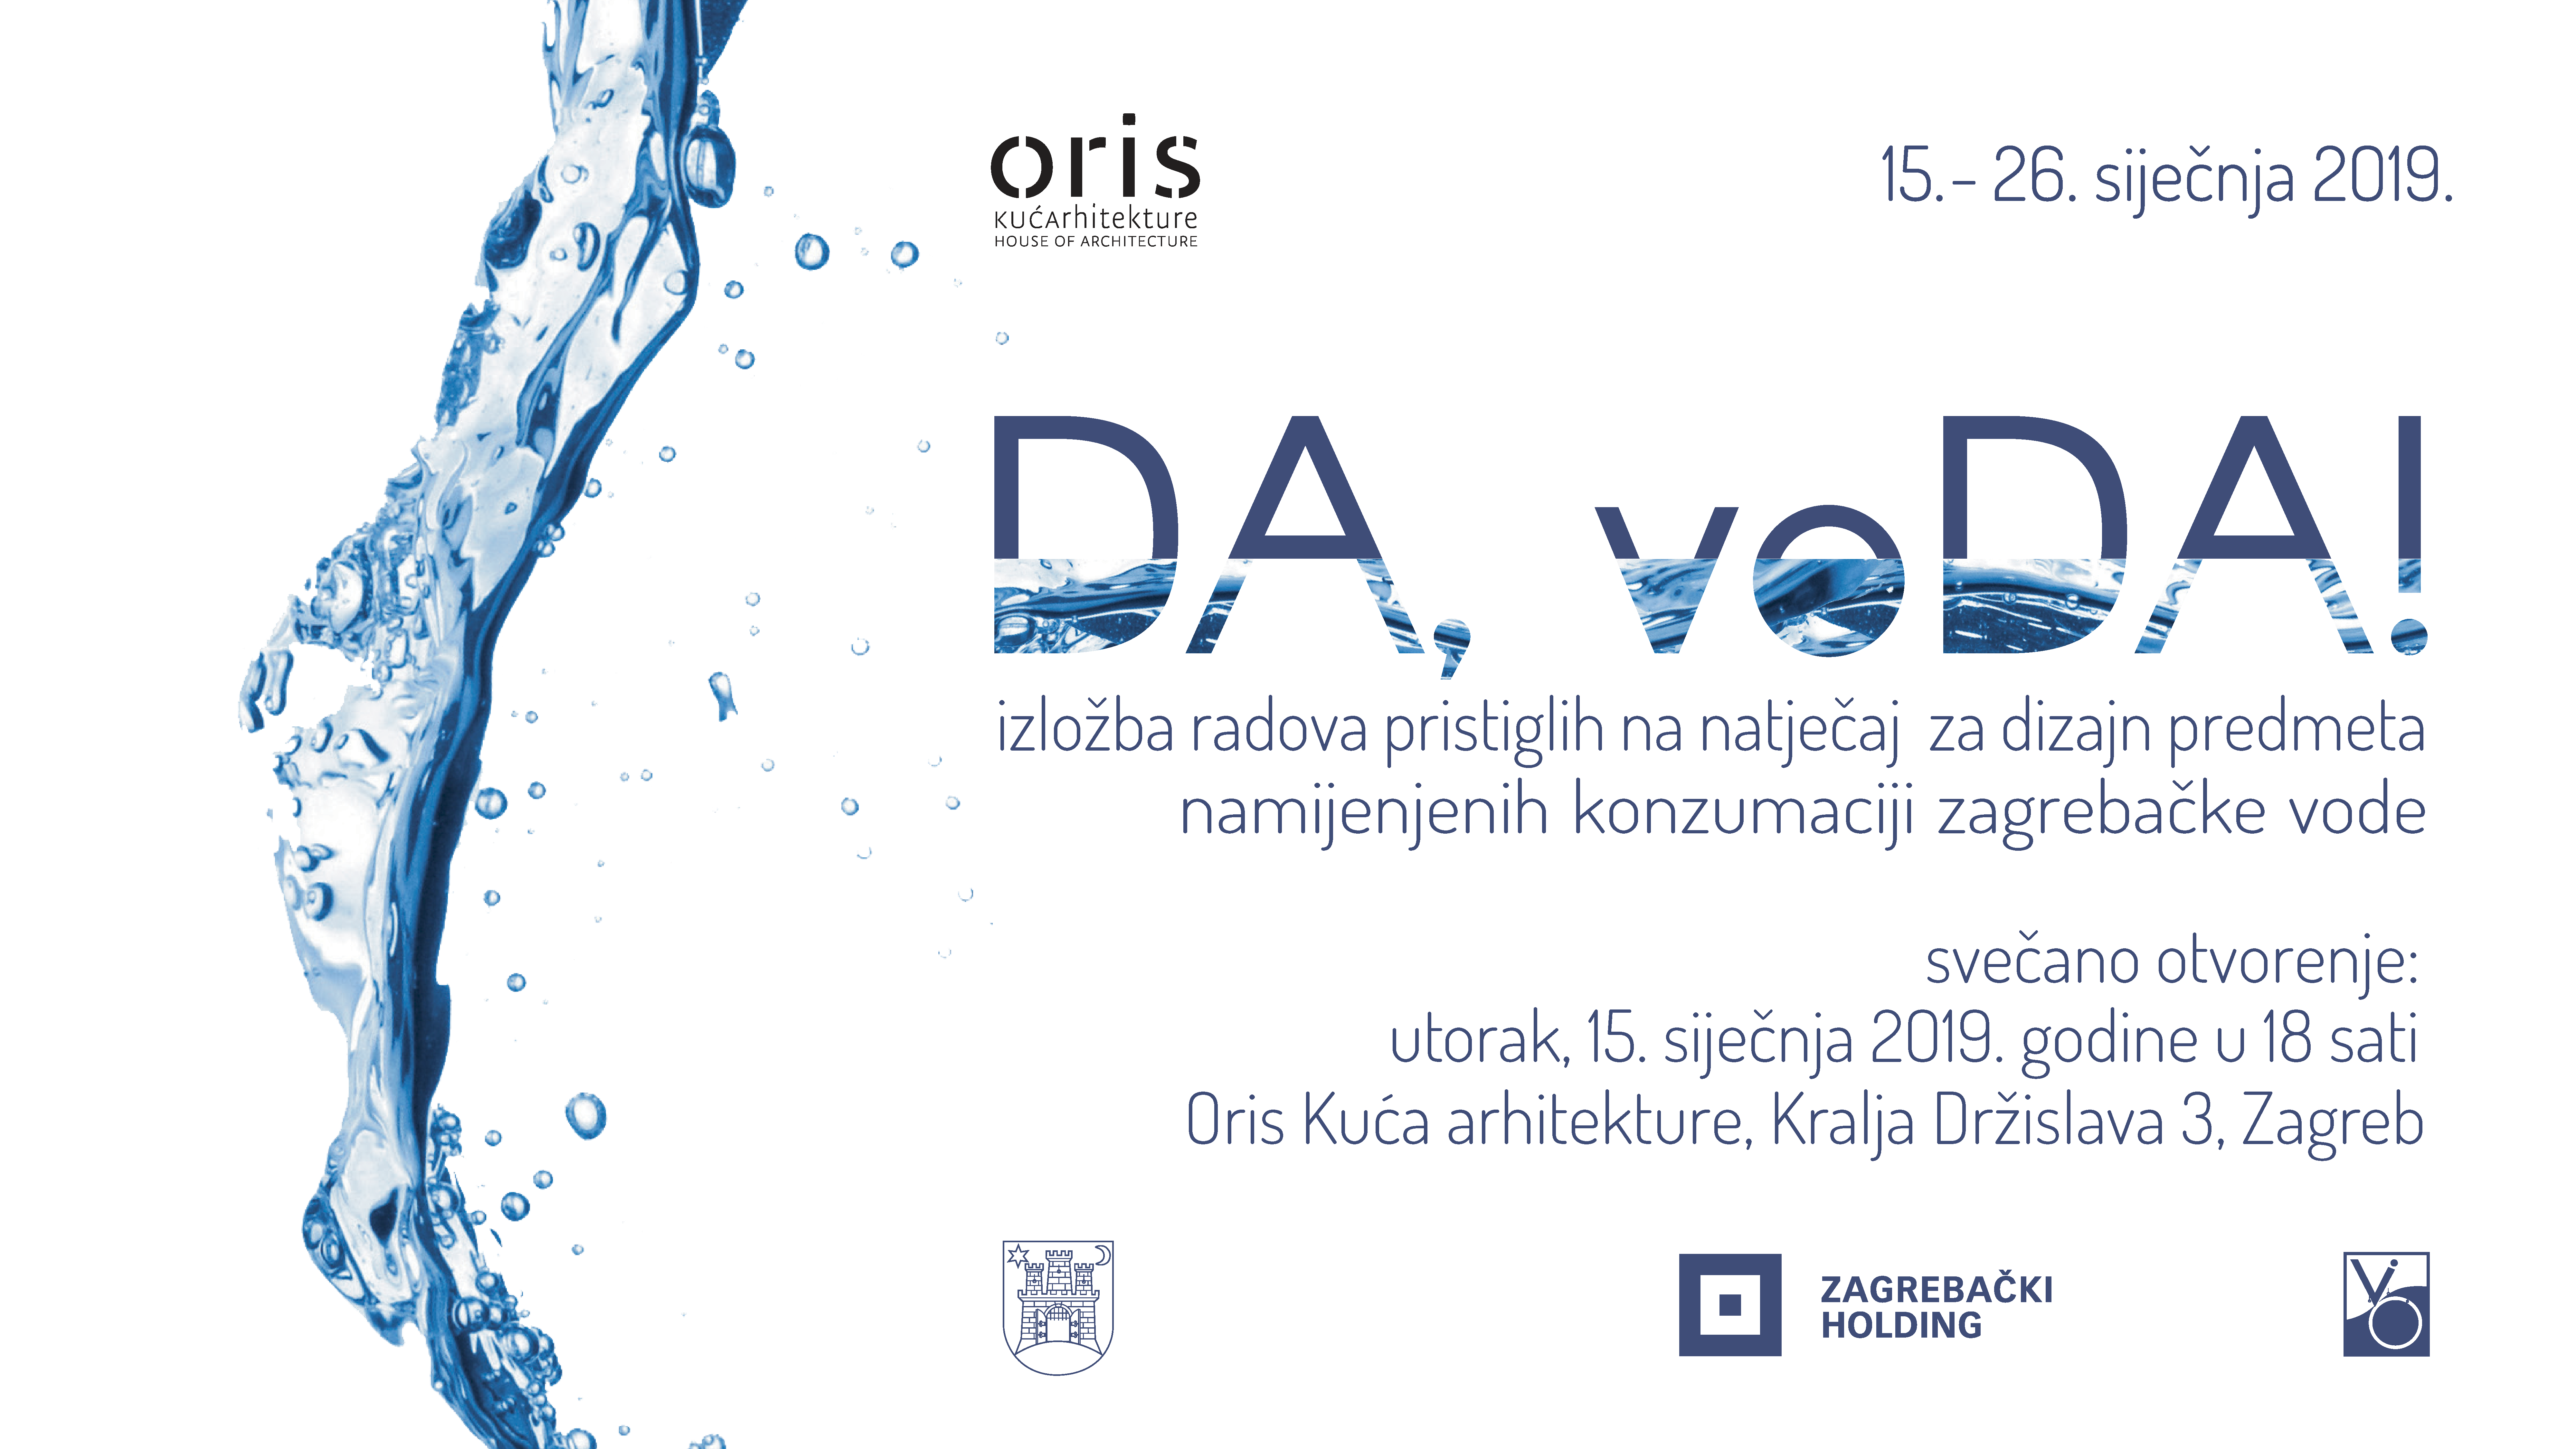 DA, voDA! Izložba radova pristiglih na natječaj za dizajn predmeta namijenjenih konzumaciji zagrebačke vode